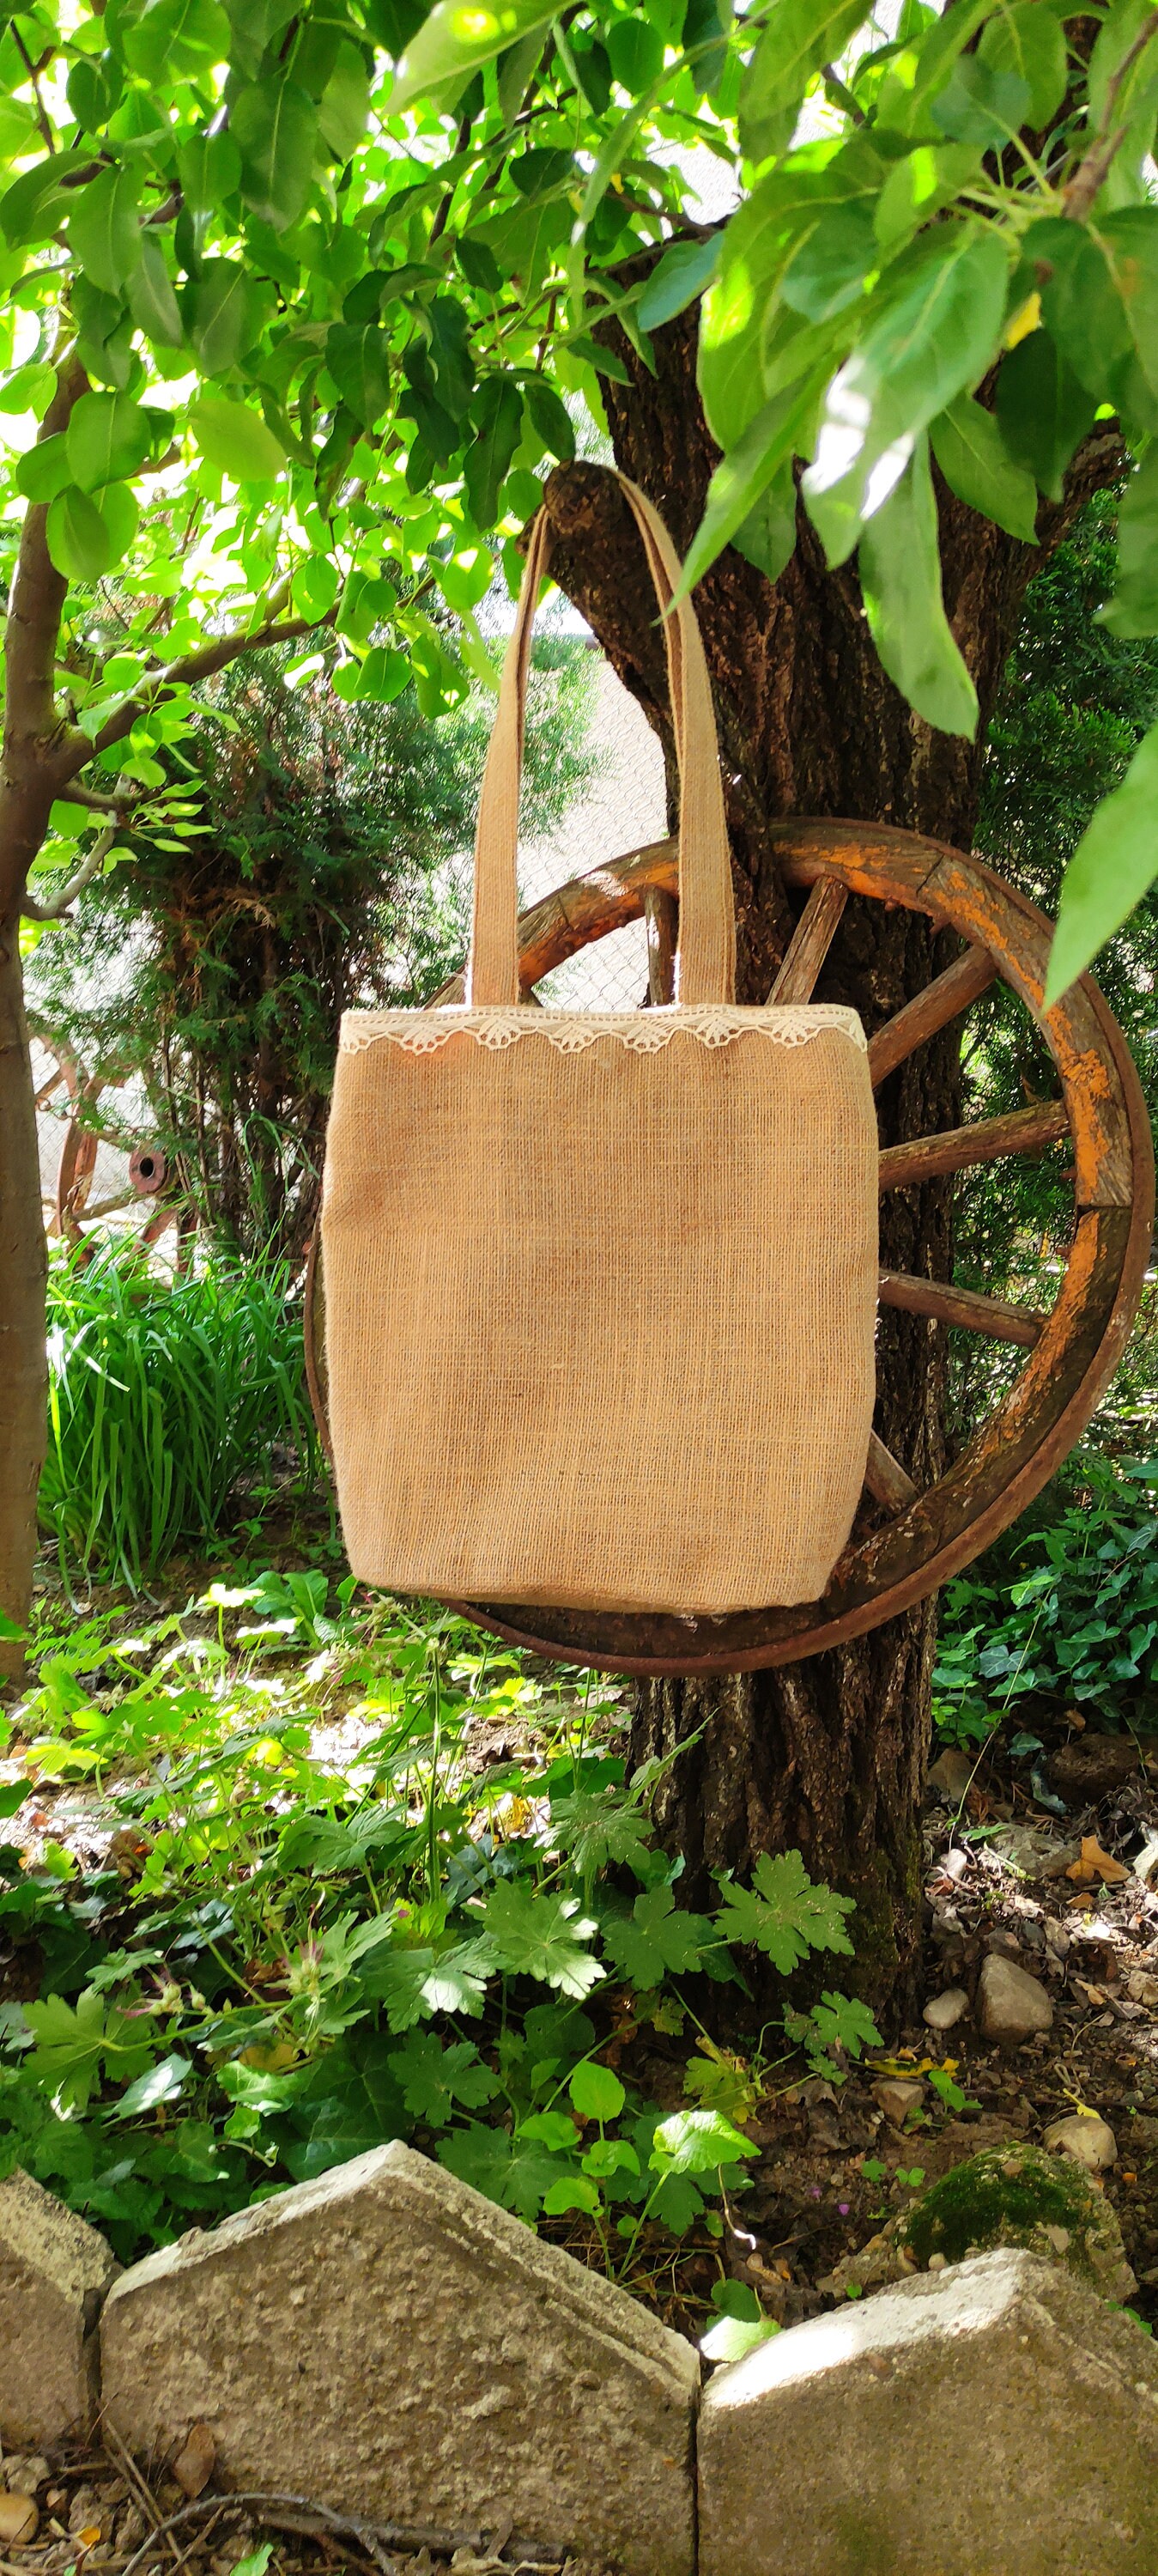 Rose Genuine Leather Nano Bag - Spacious Compartments - Work & Travel Bag - Durable & Water Resistant - Linda, the Nano Bag by Eske Paris